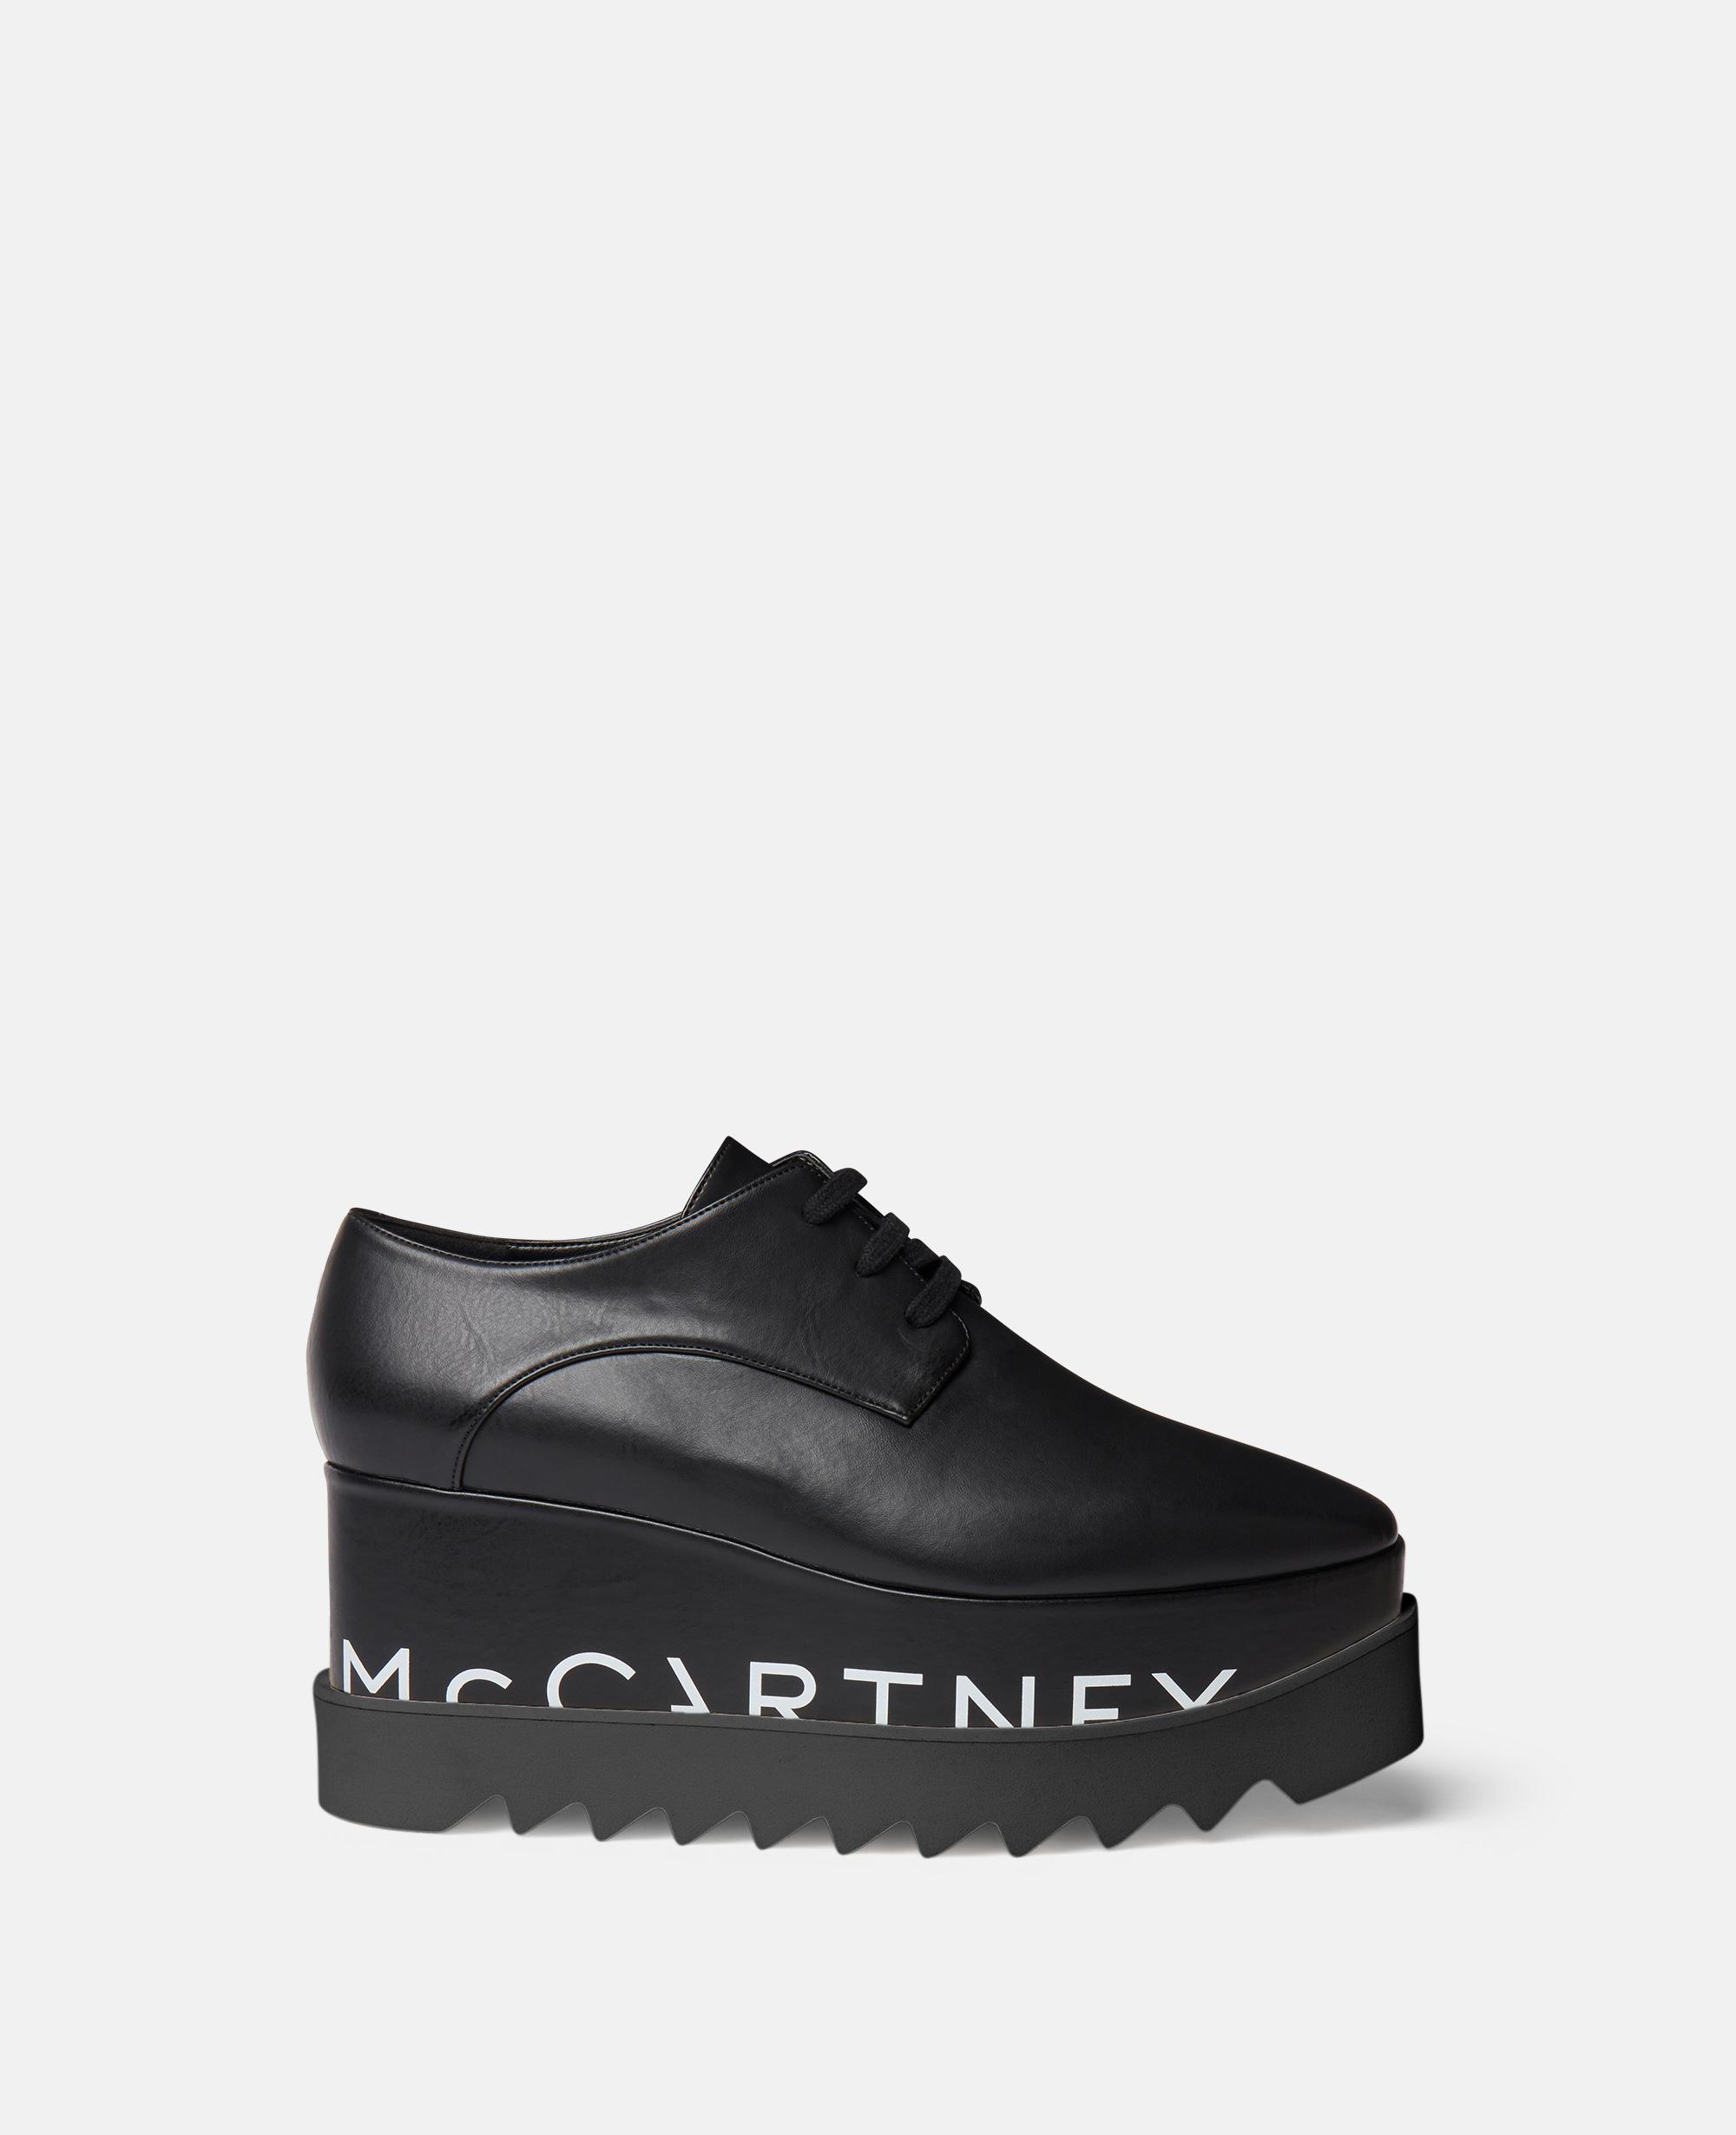 Stella McCartney Elyse Logo Platform Shoes in Black | Lyst